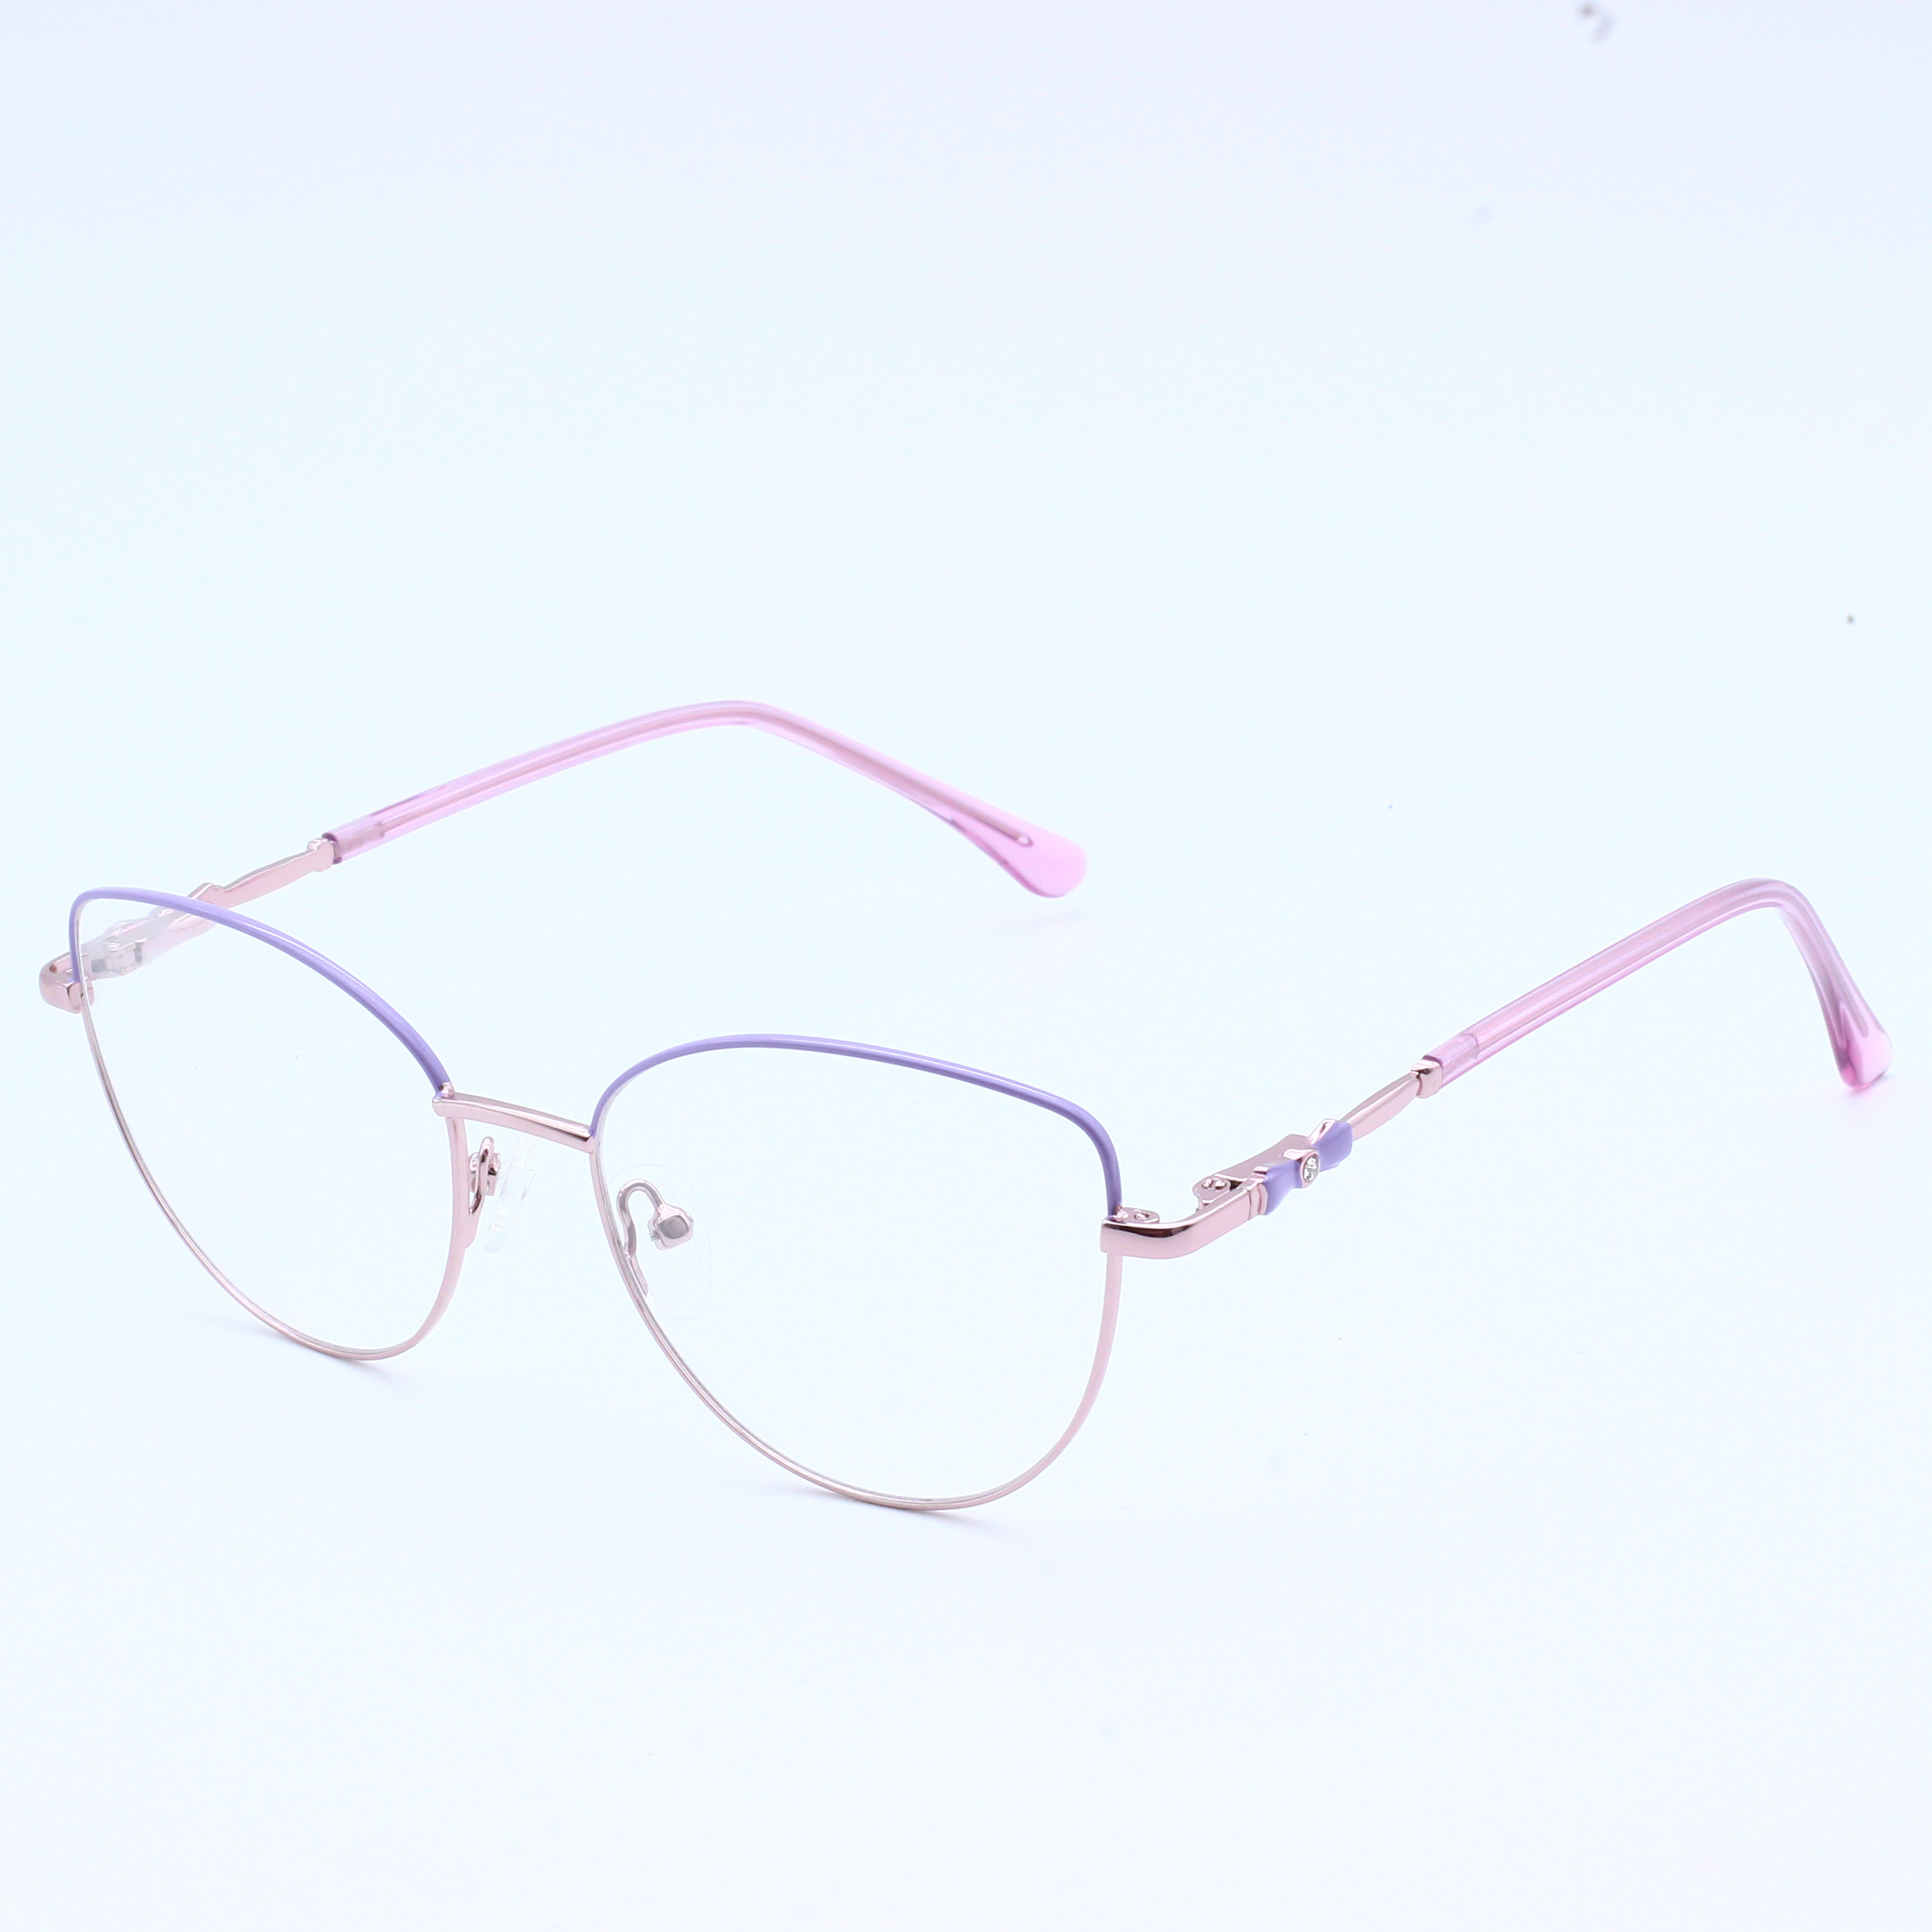 Stock clearance metal optical glasses frame random stainless metal (10)